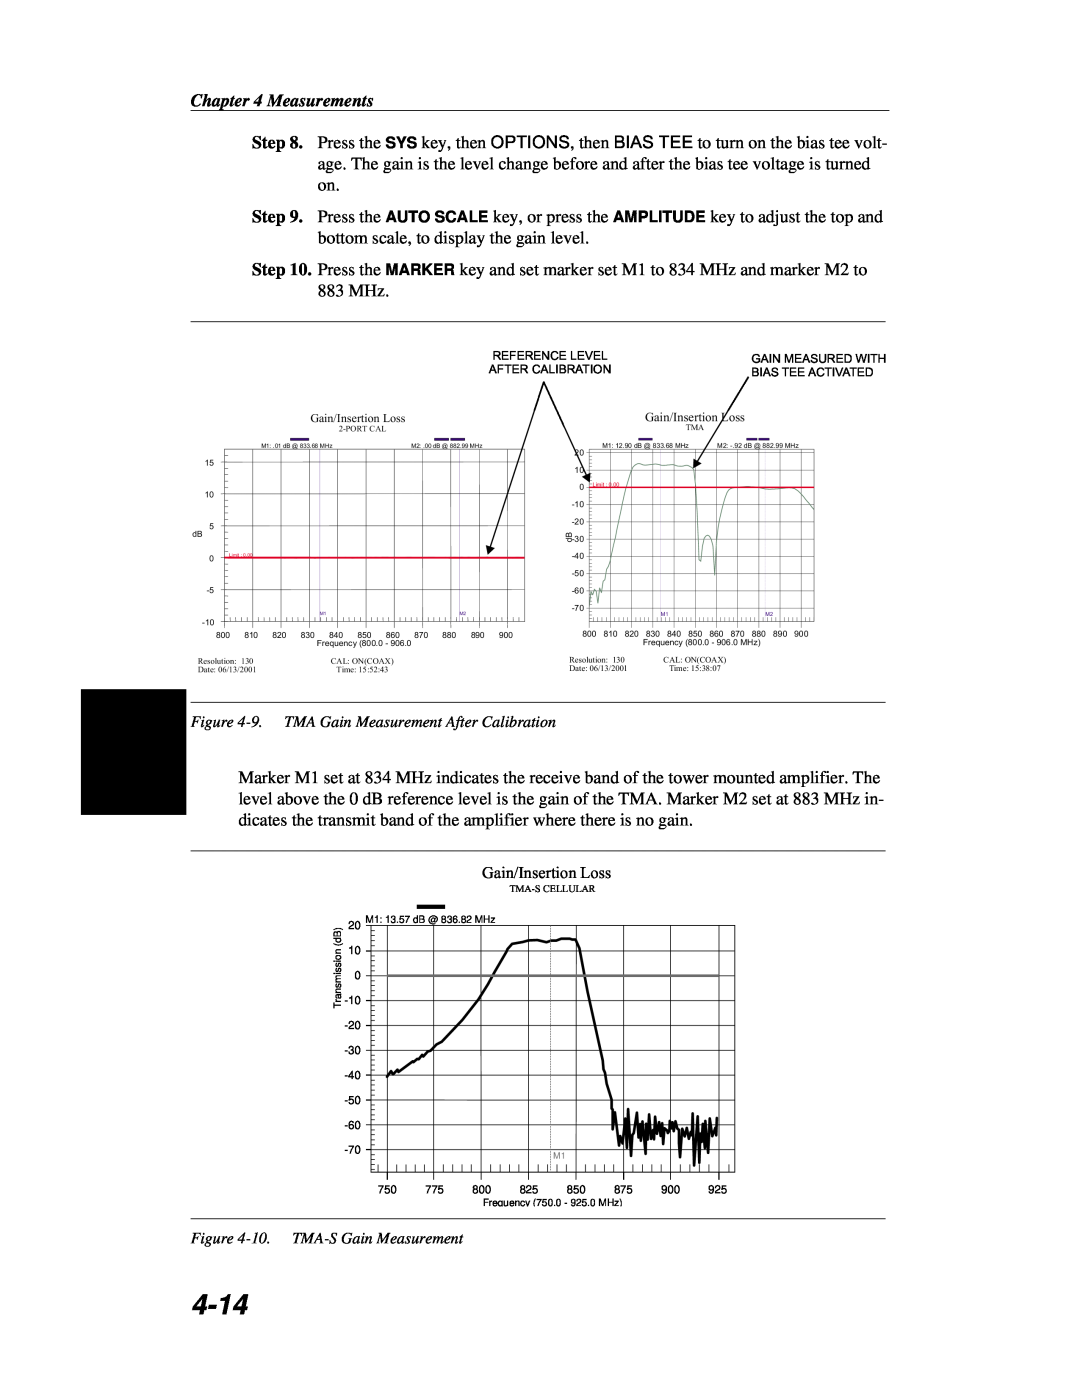 Anritsu S251C 4-14, Measurements, 9.TMA Gain Measurement After Calibration, Gain/Insertion Loss, 10. TMA-SGain Measurement 